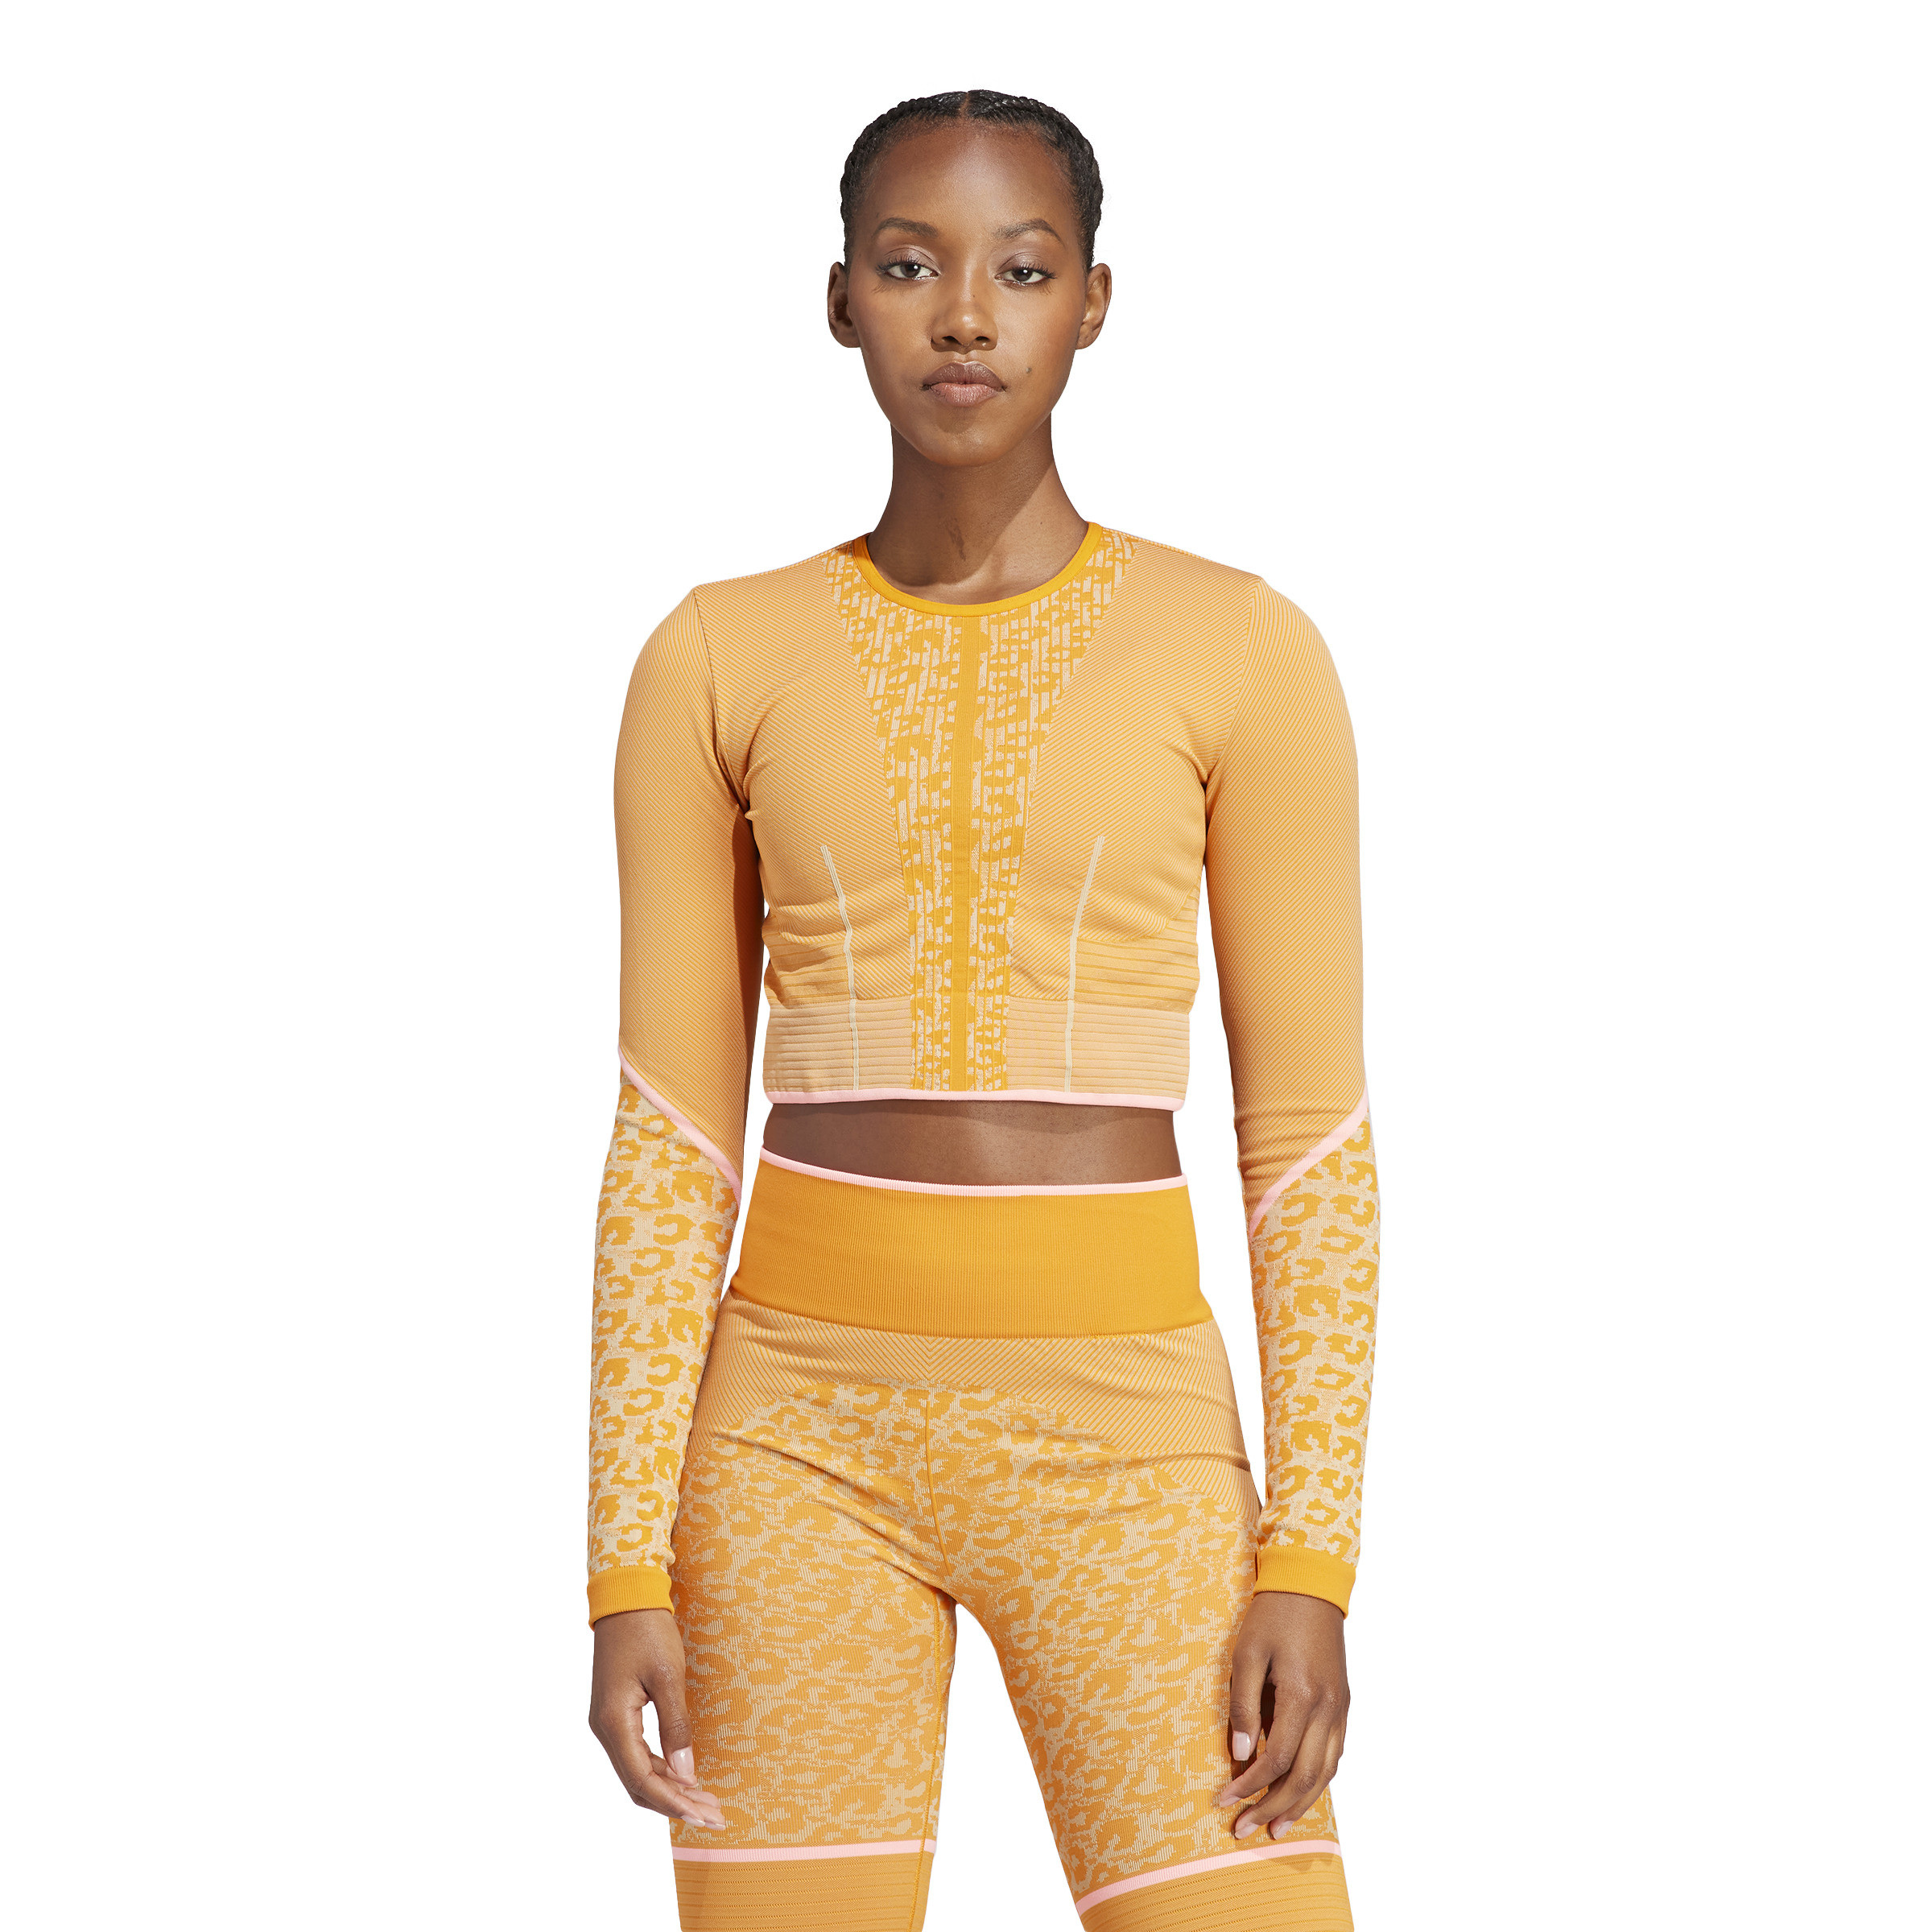 Adidas by Stella McCartney - TrueStrength Seamless Long Sleeve Yoga Top, Orange, large image number 2